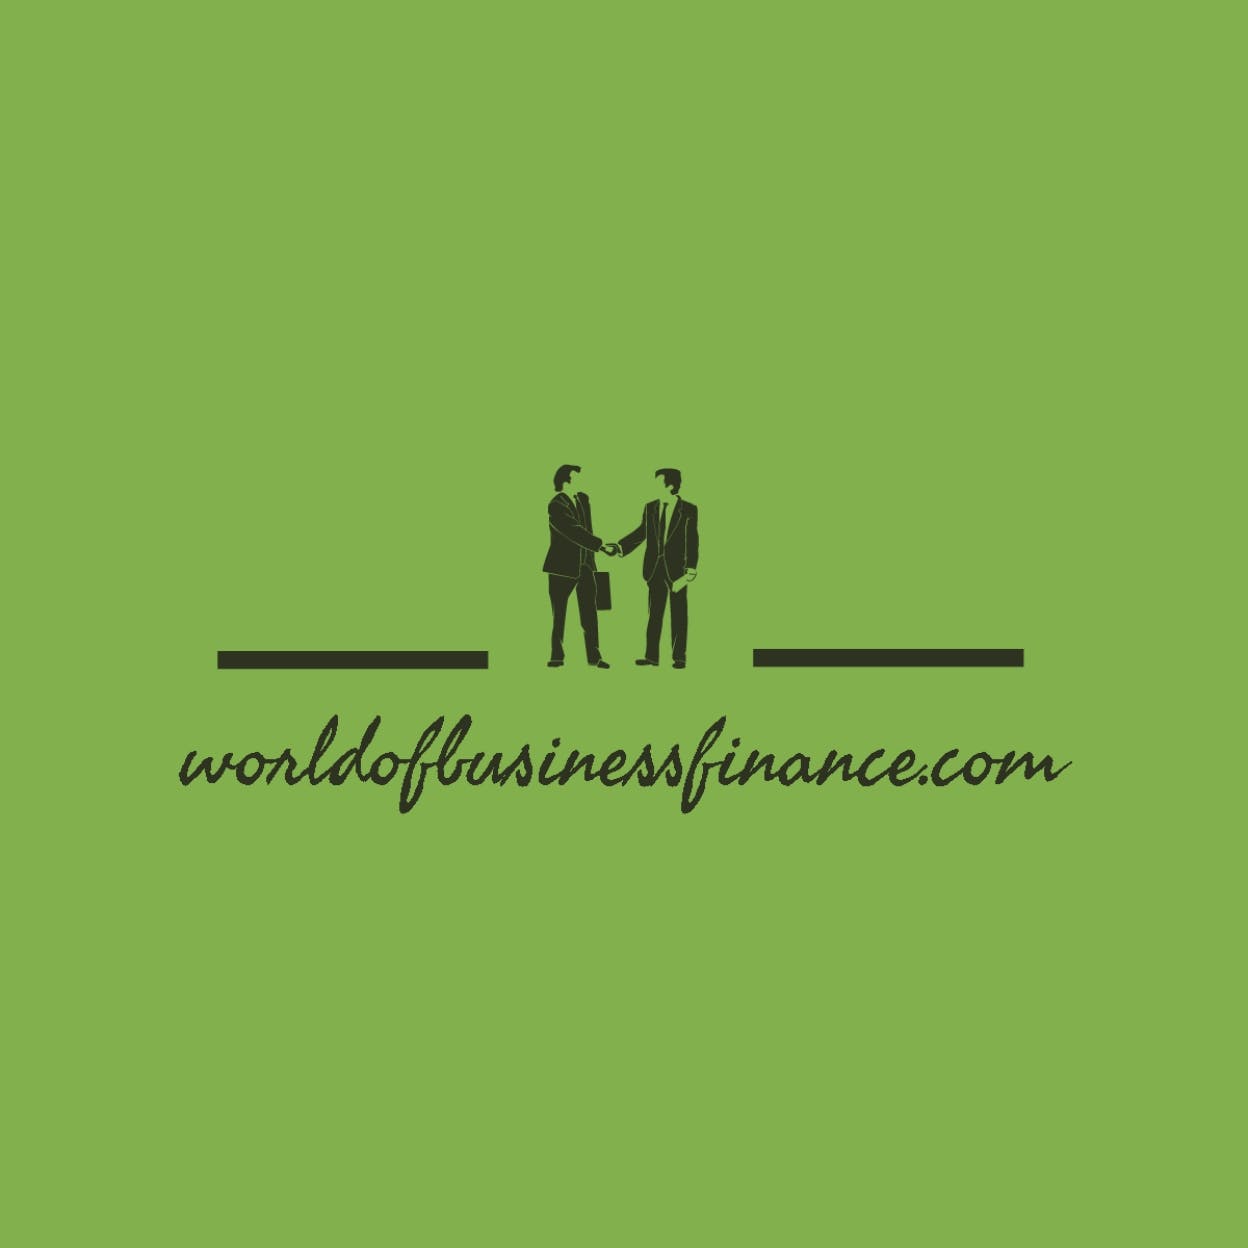 Worldofbusinessfinance media 1